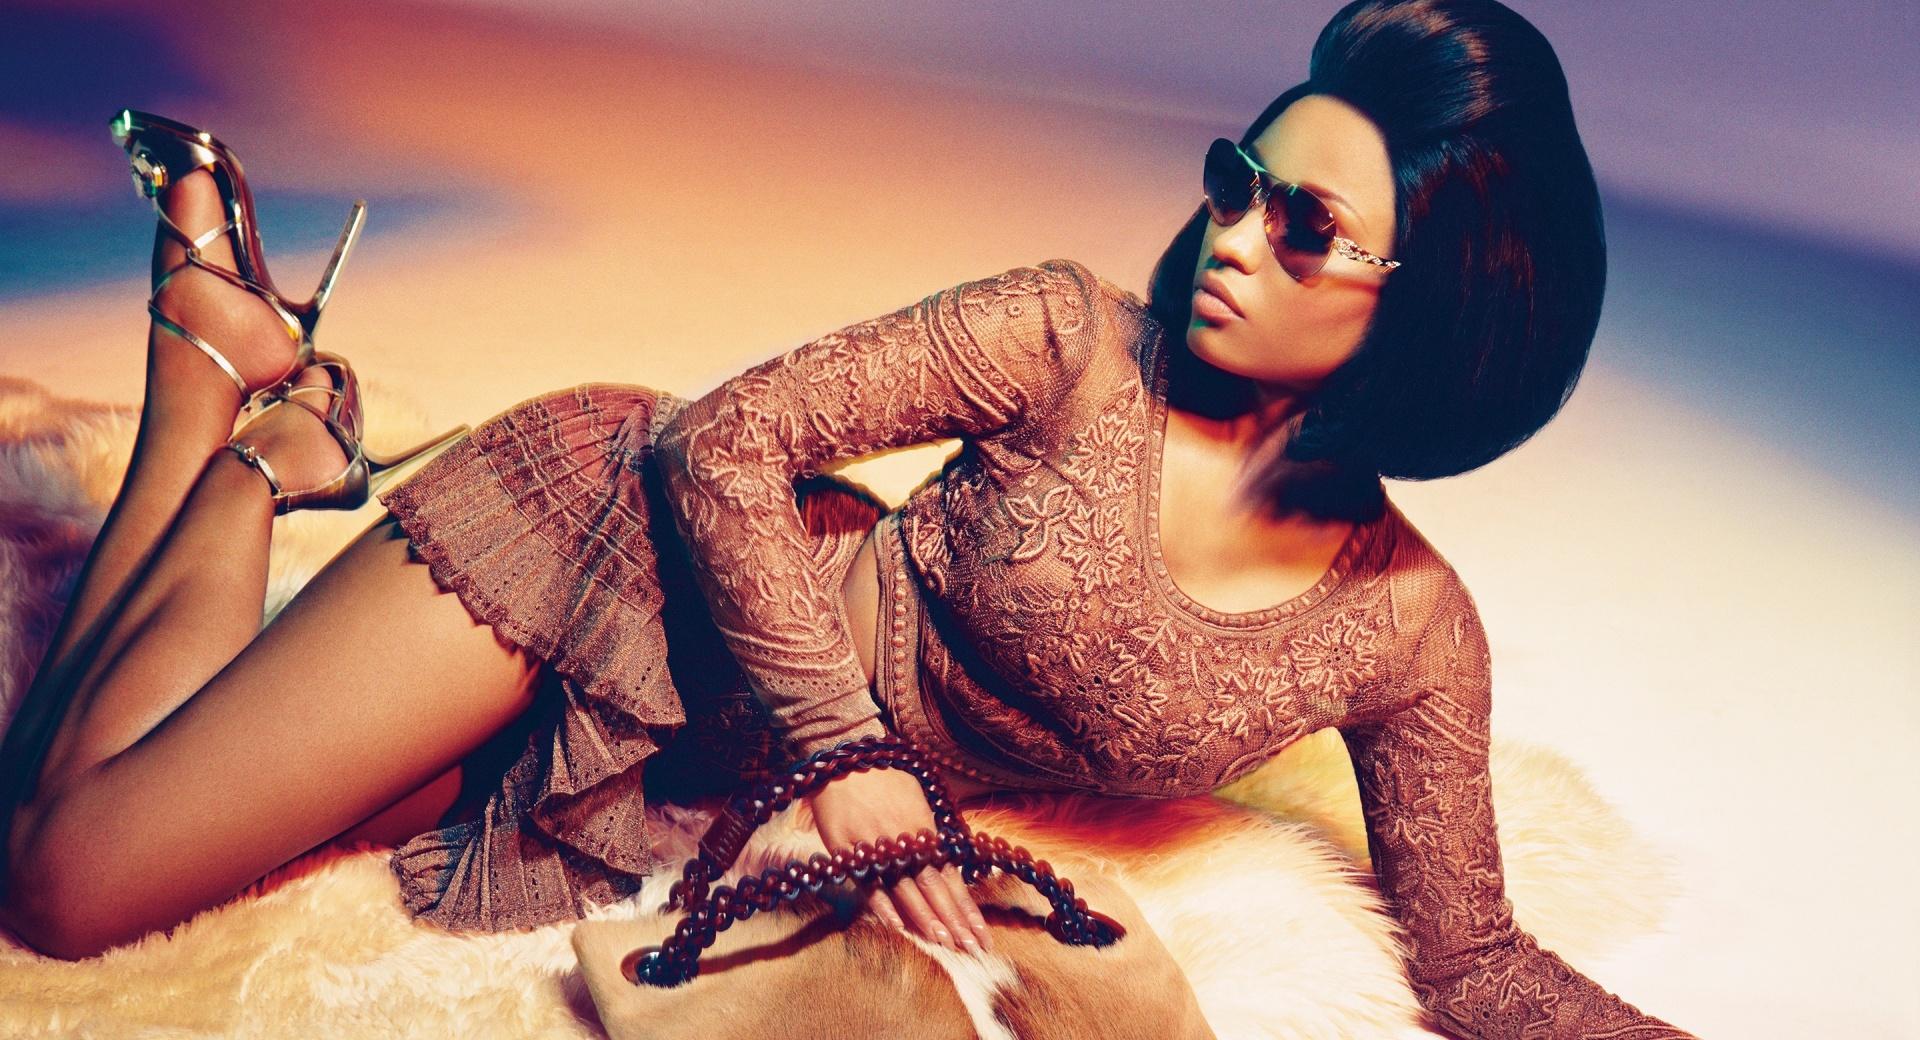 Nicki Minaj Fashion 2015 at 320 x 480 iPhone size wallpapers HD quality